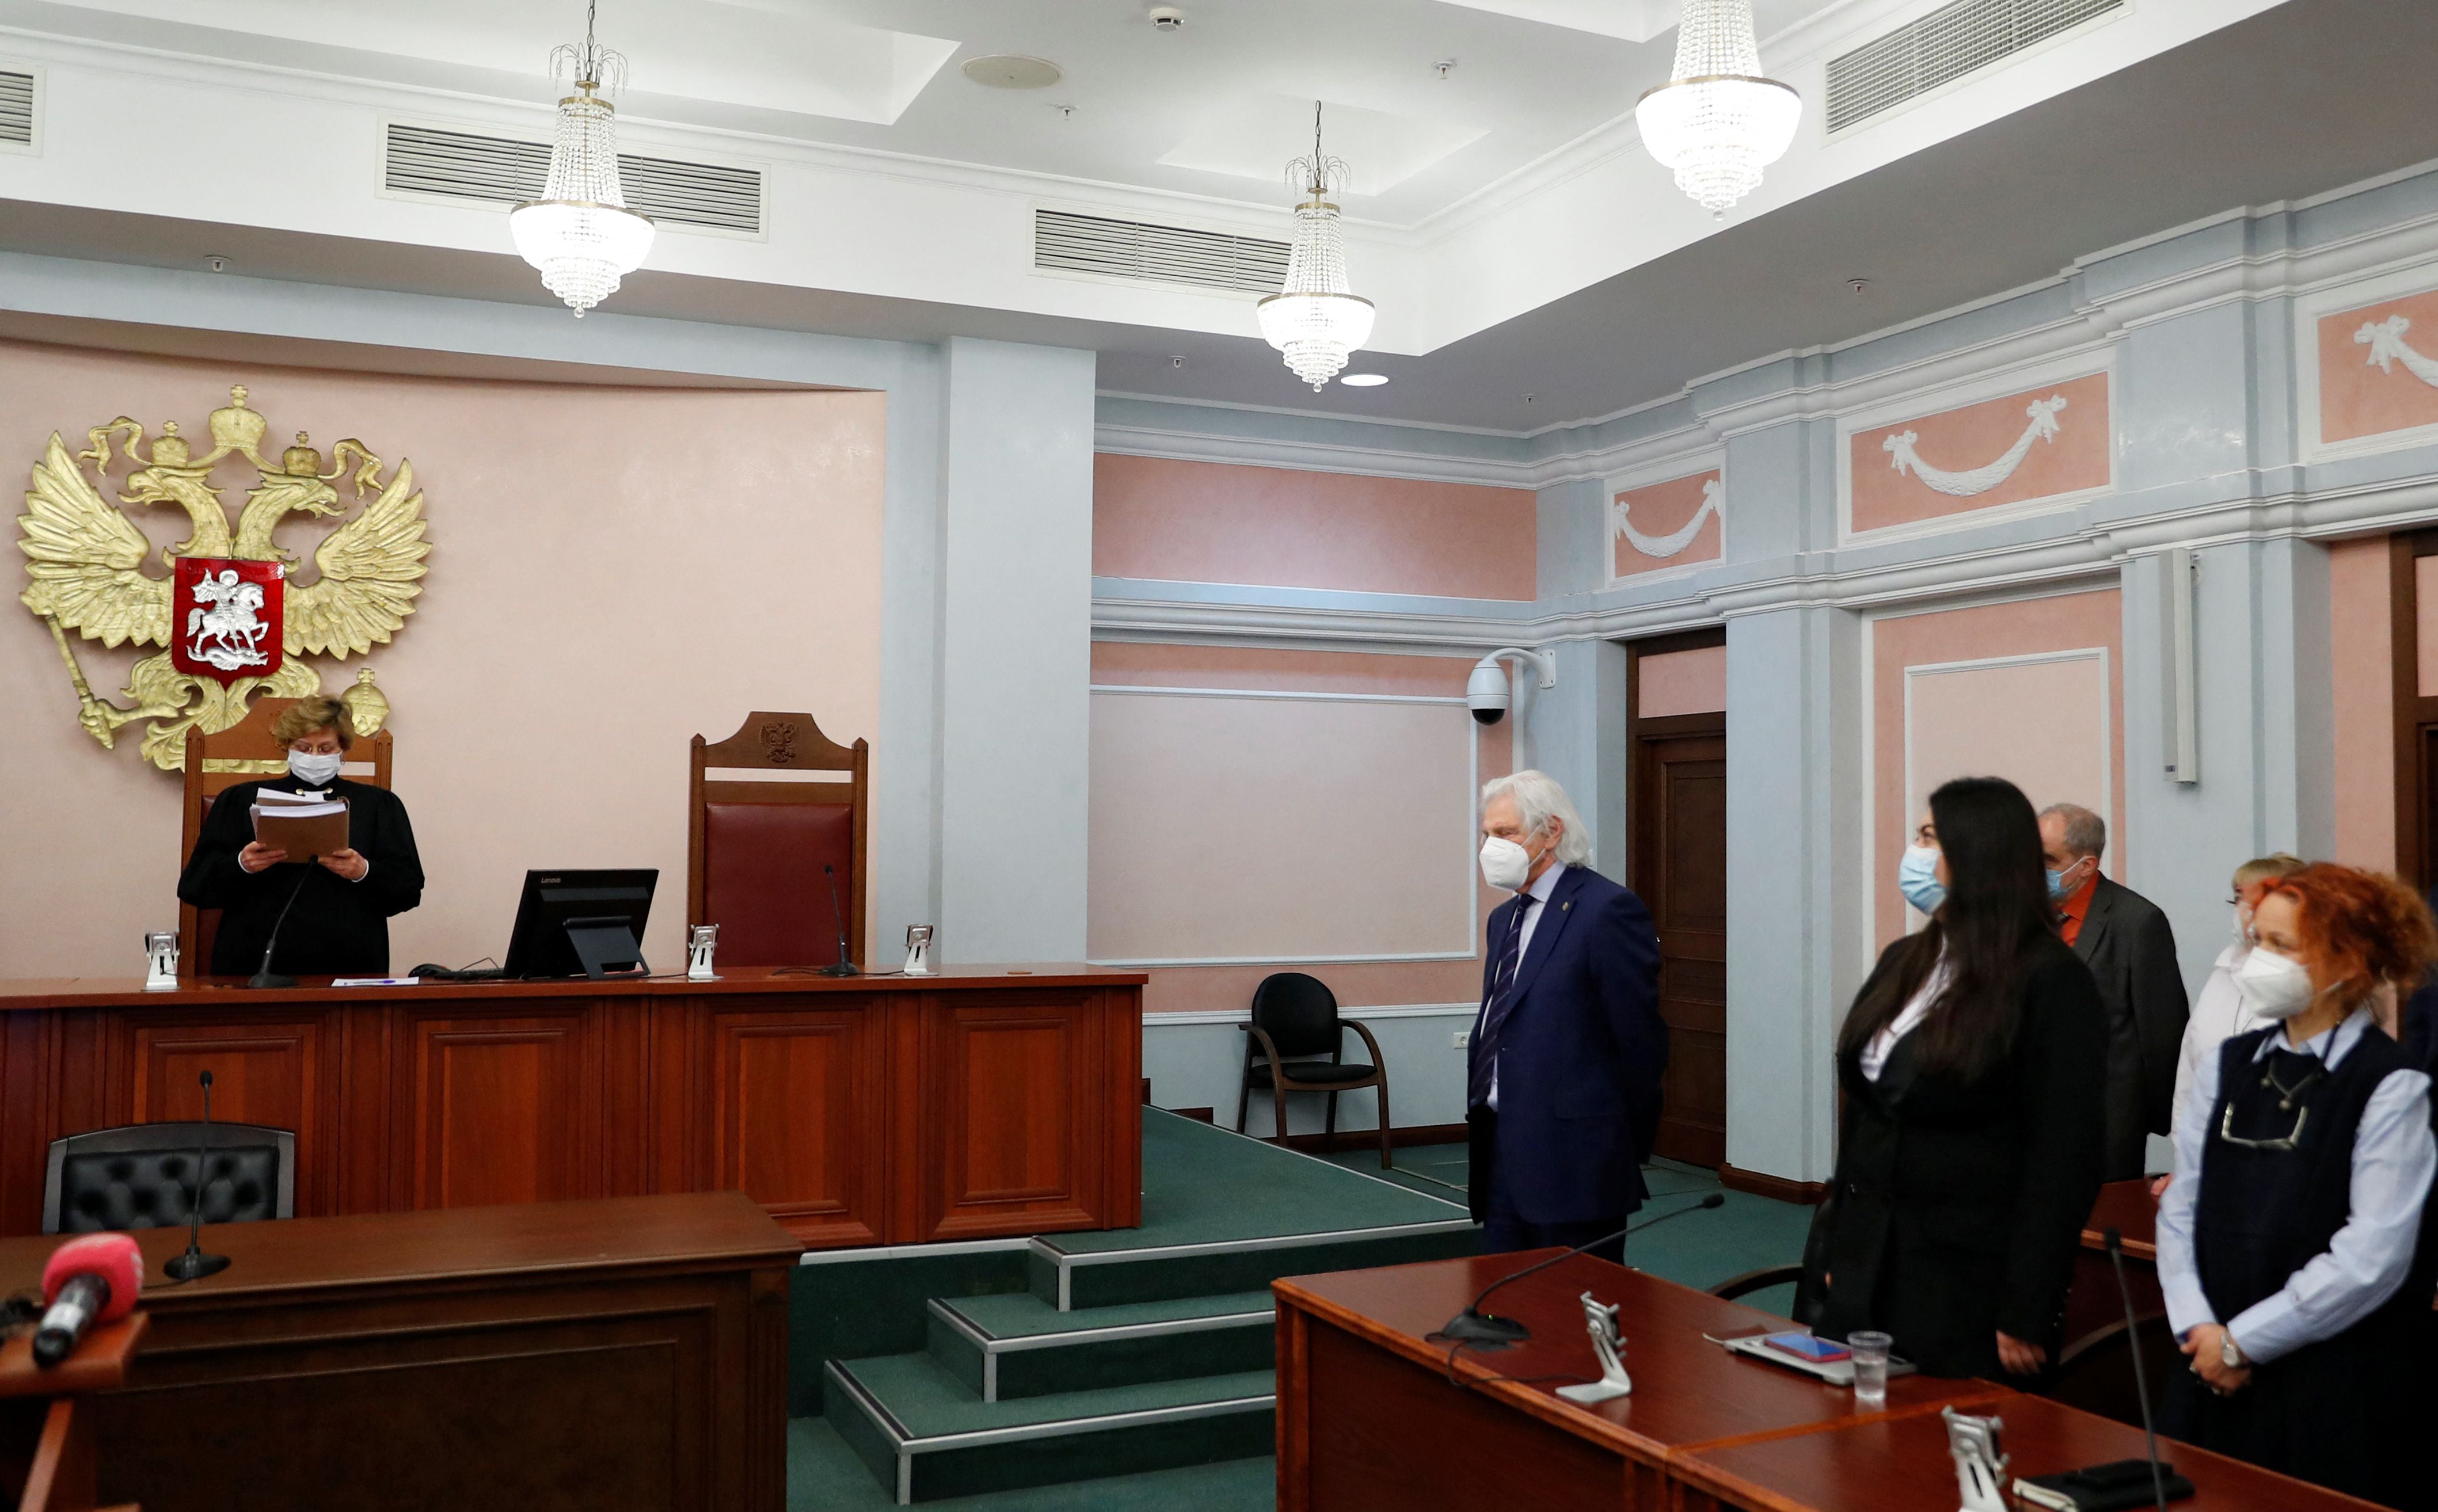 A judge of the Supreme Court of Russia pronounces the verdict (Photo: REUTERS / Evgenia Novozhenina)